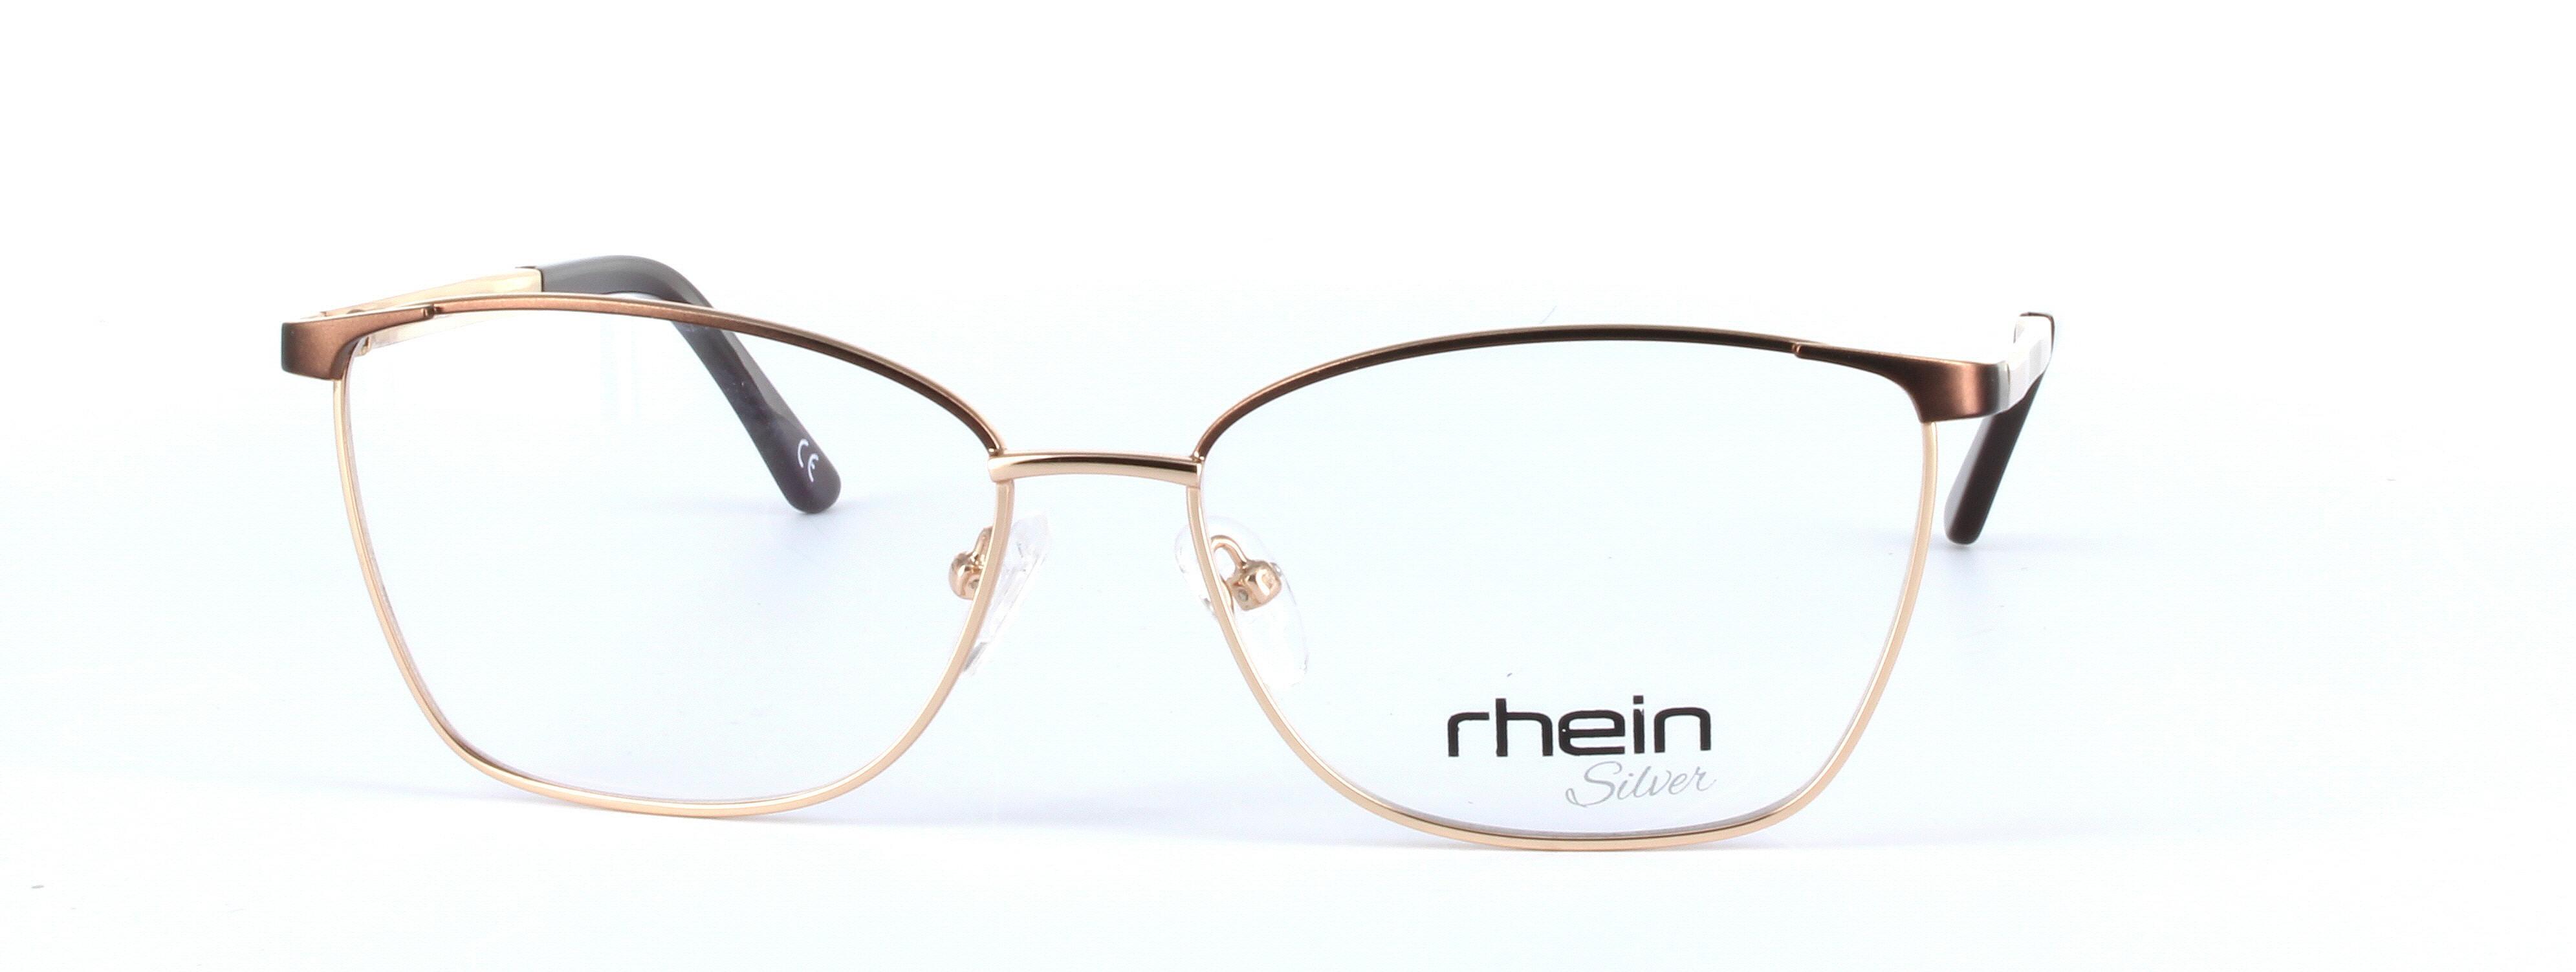 Allegra Brown Full Rim Oval Round Metal Glasses - Image View 5